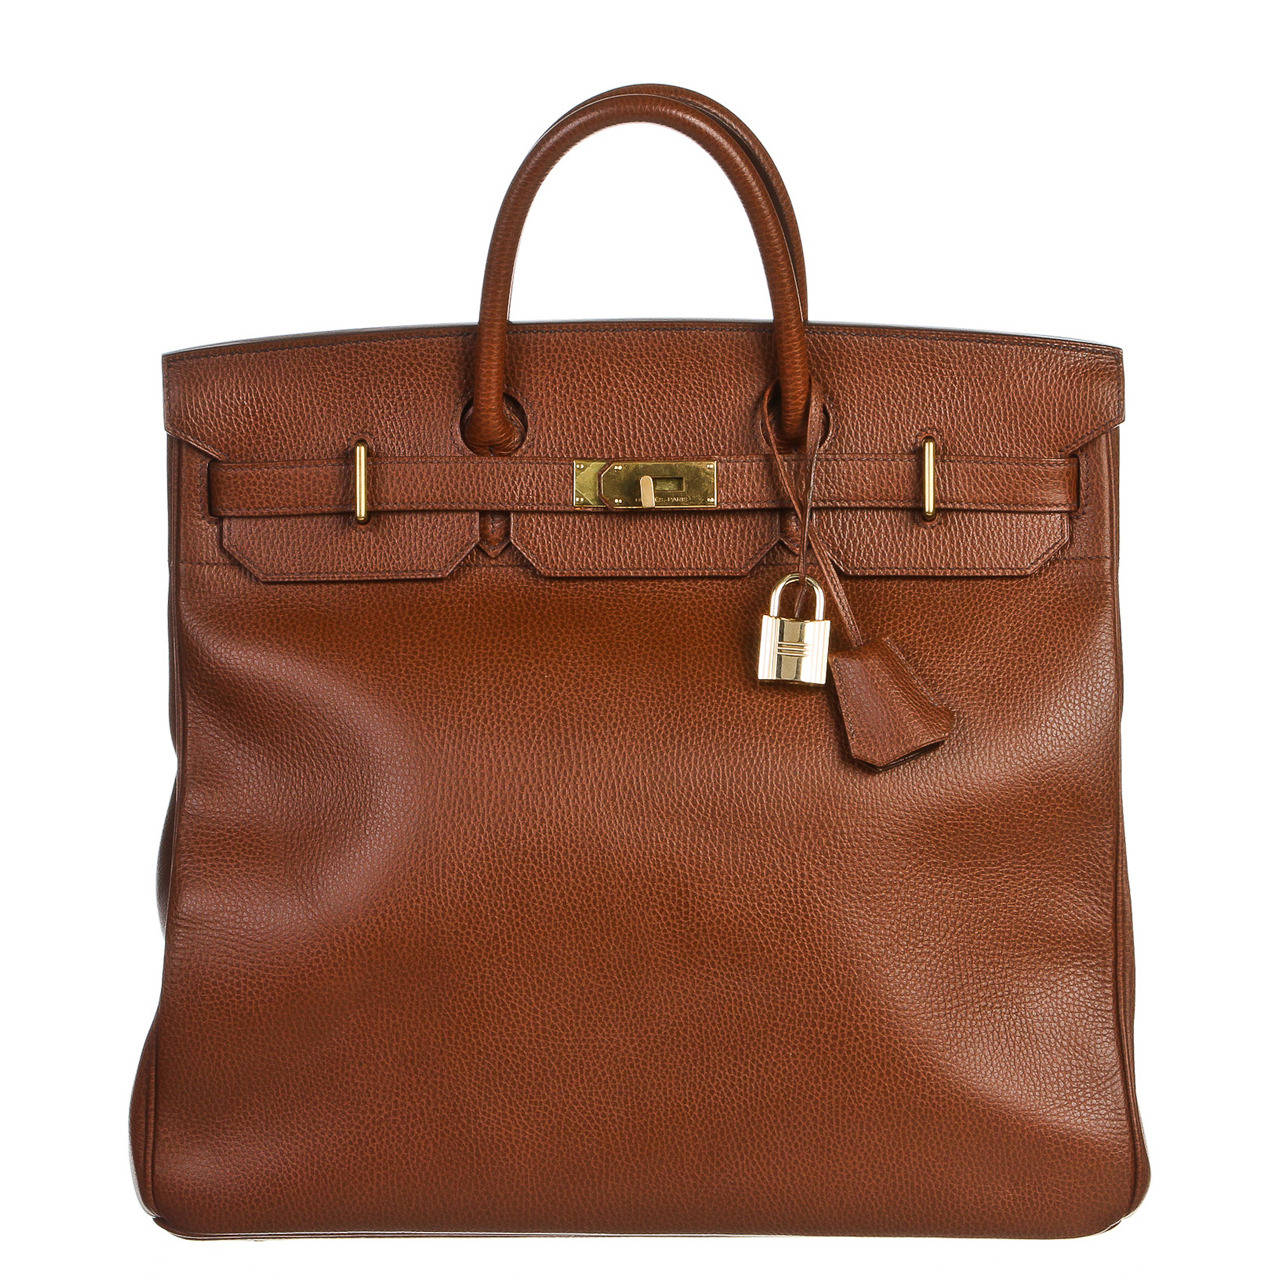 Hermes Brown Leather 45cm HAC Birkin Handbag